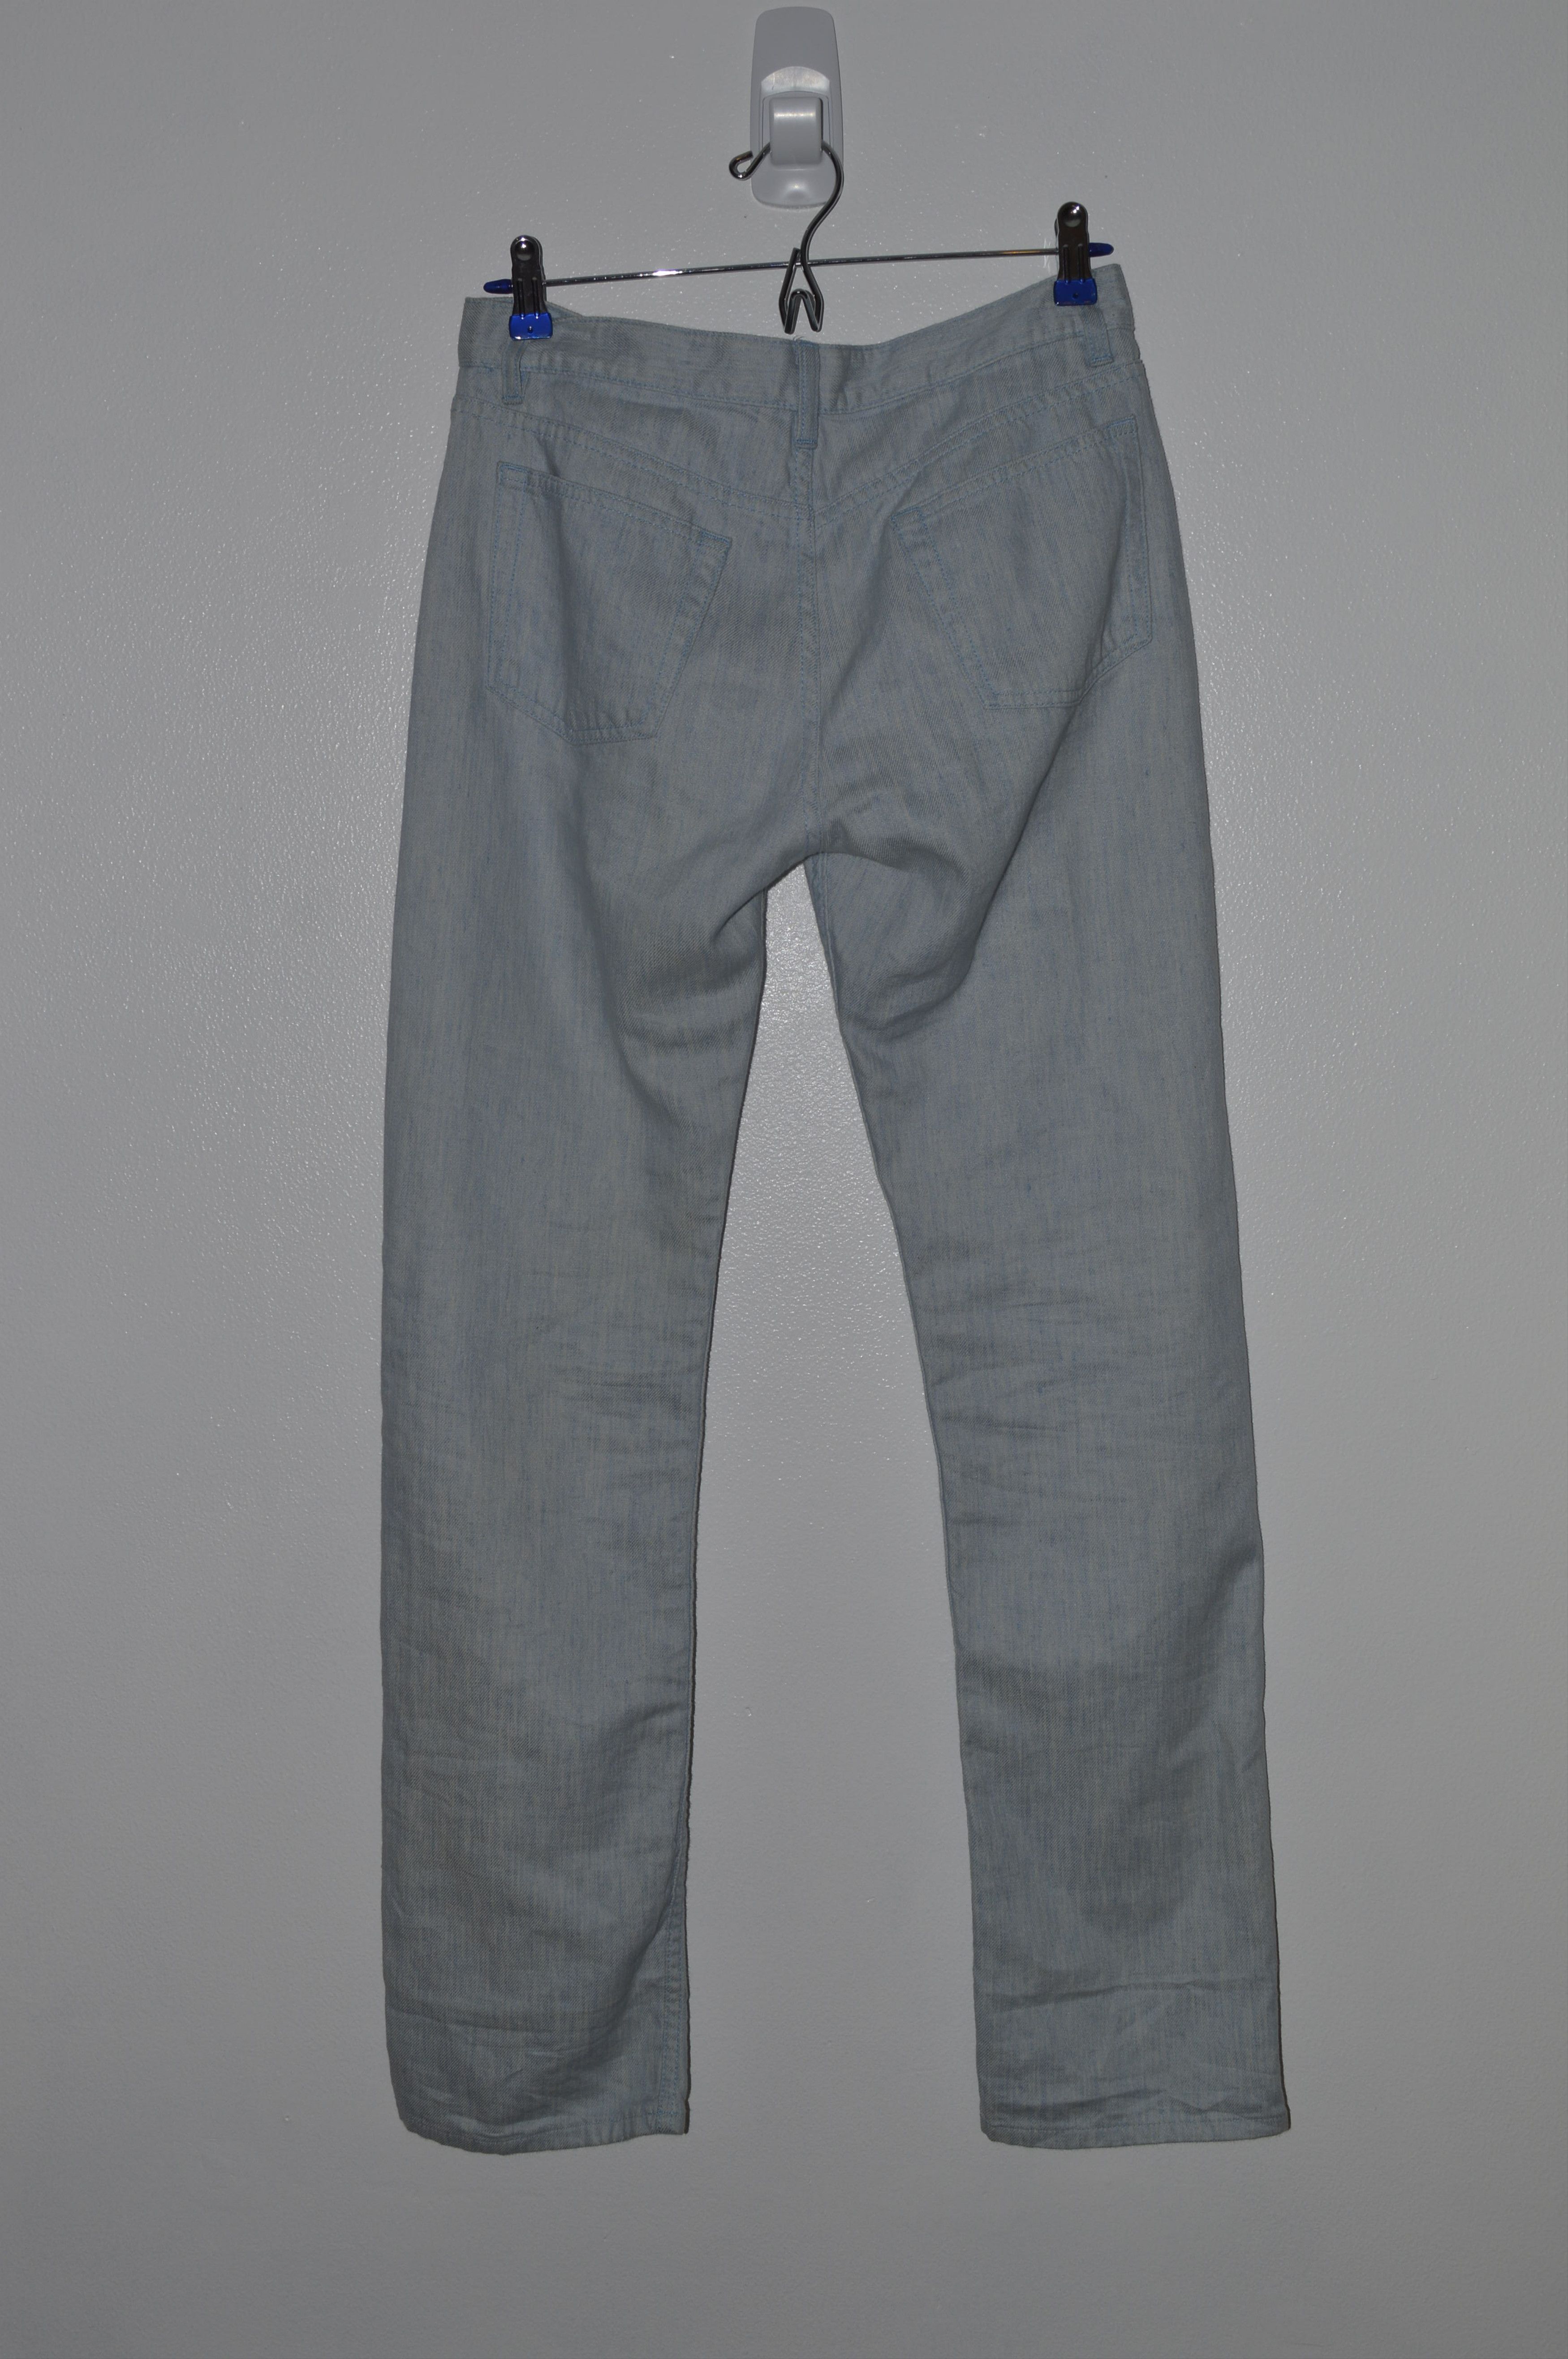 Helmut Lang SS/98 OG Lang Linen/Cotton Light Slim Jeans Mainline Size US 29 - 6 Thumbnail